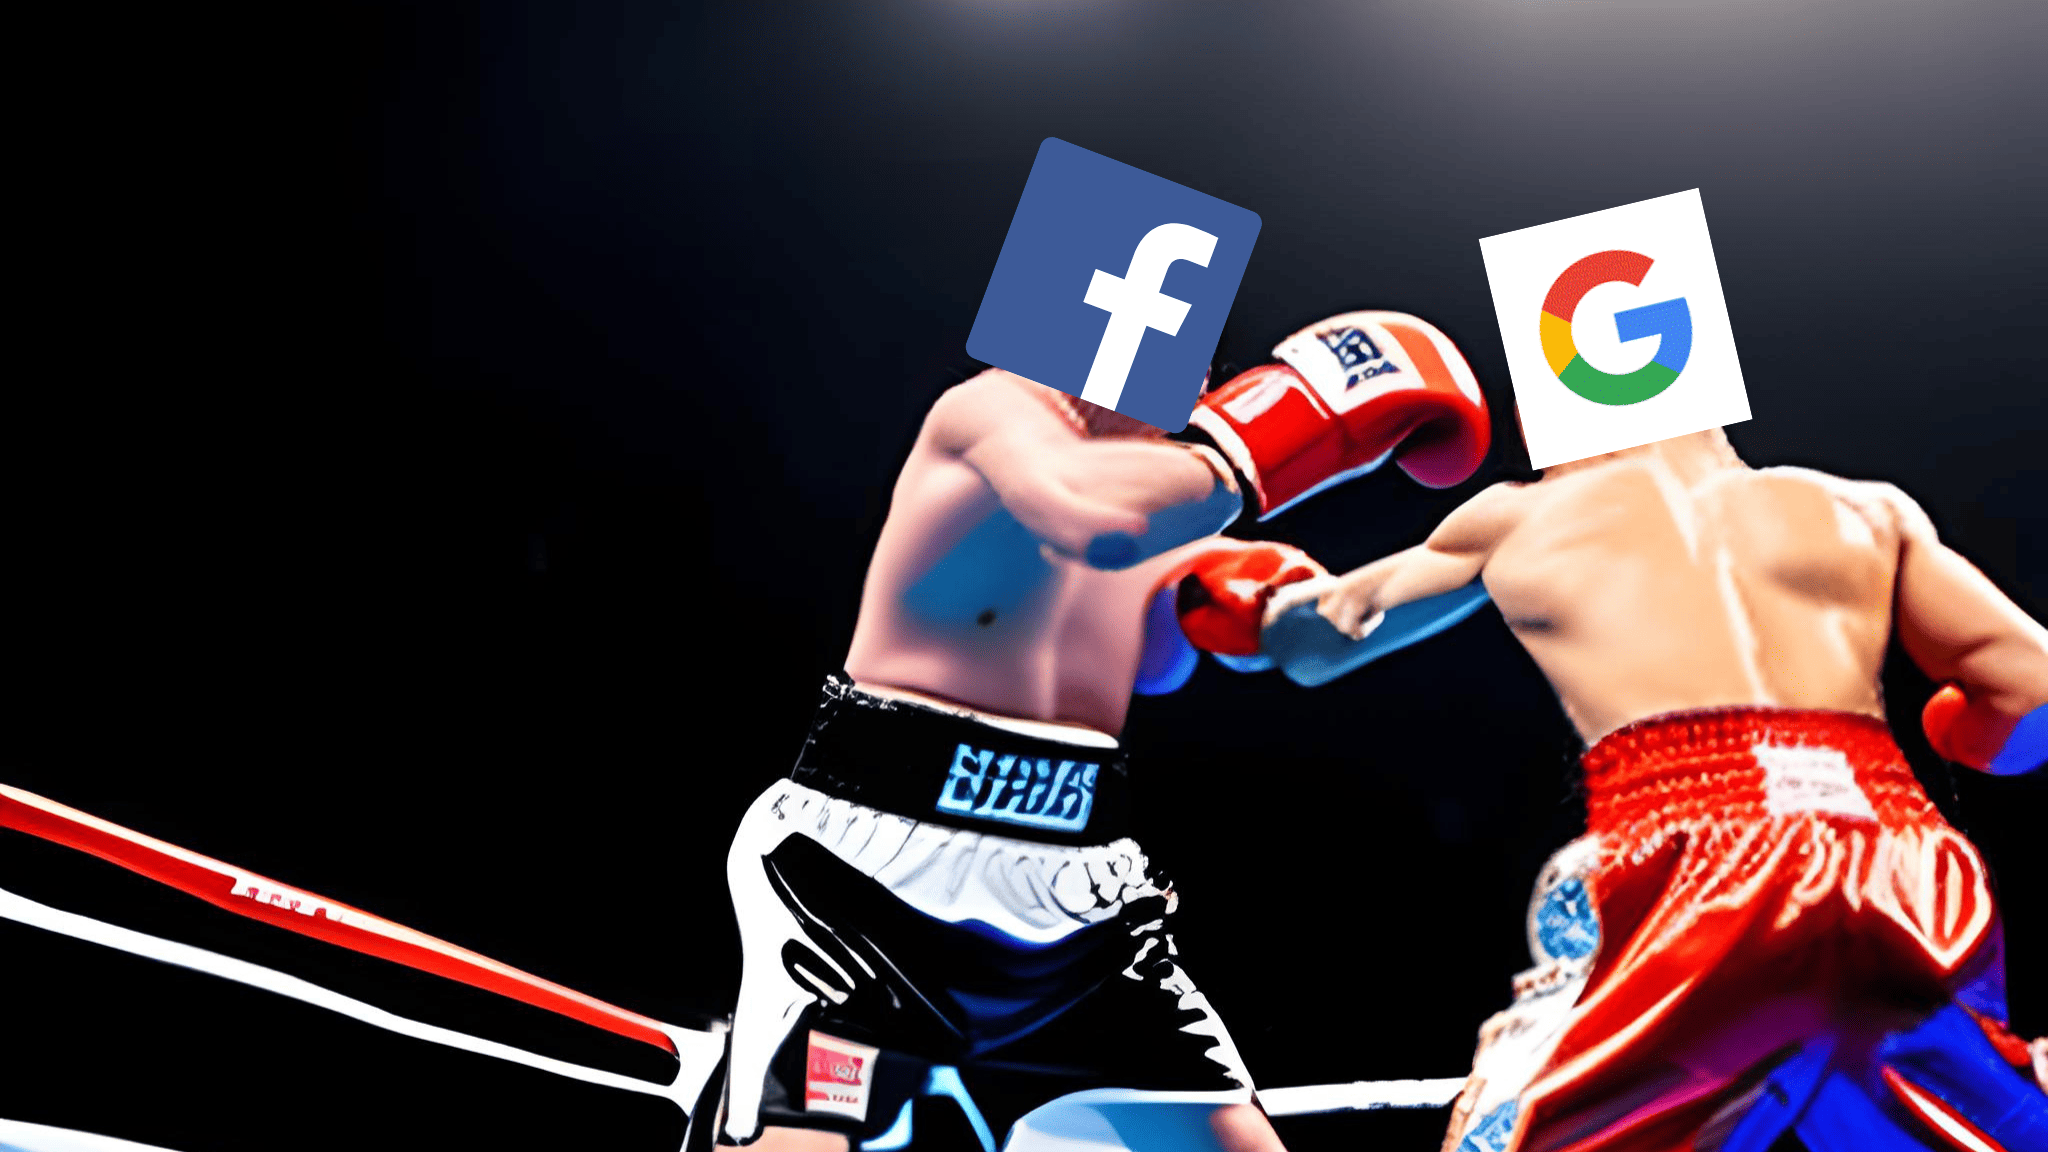 Google VS Facebook in a boxing match